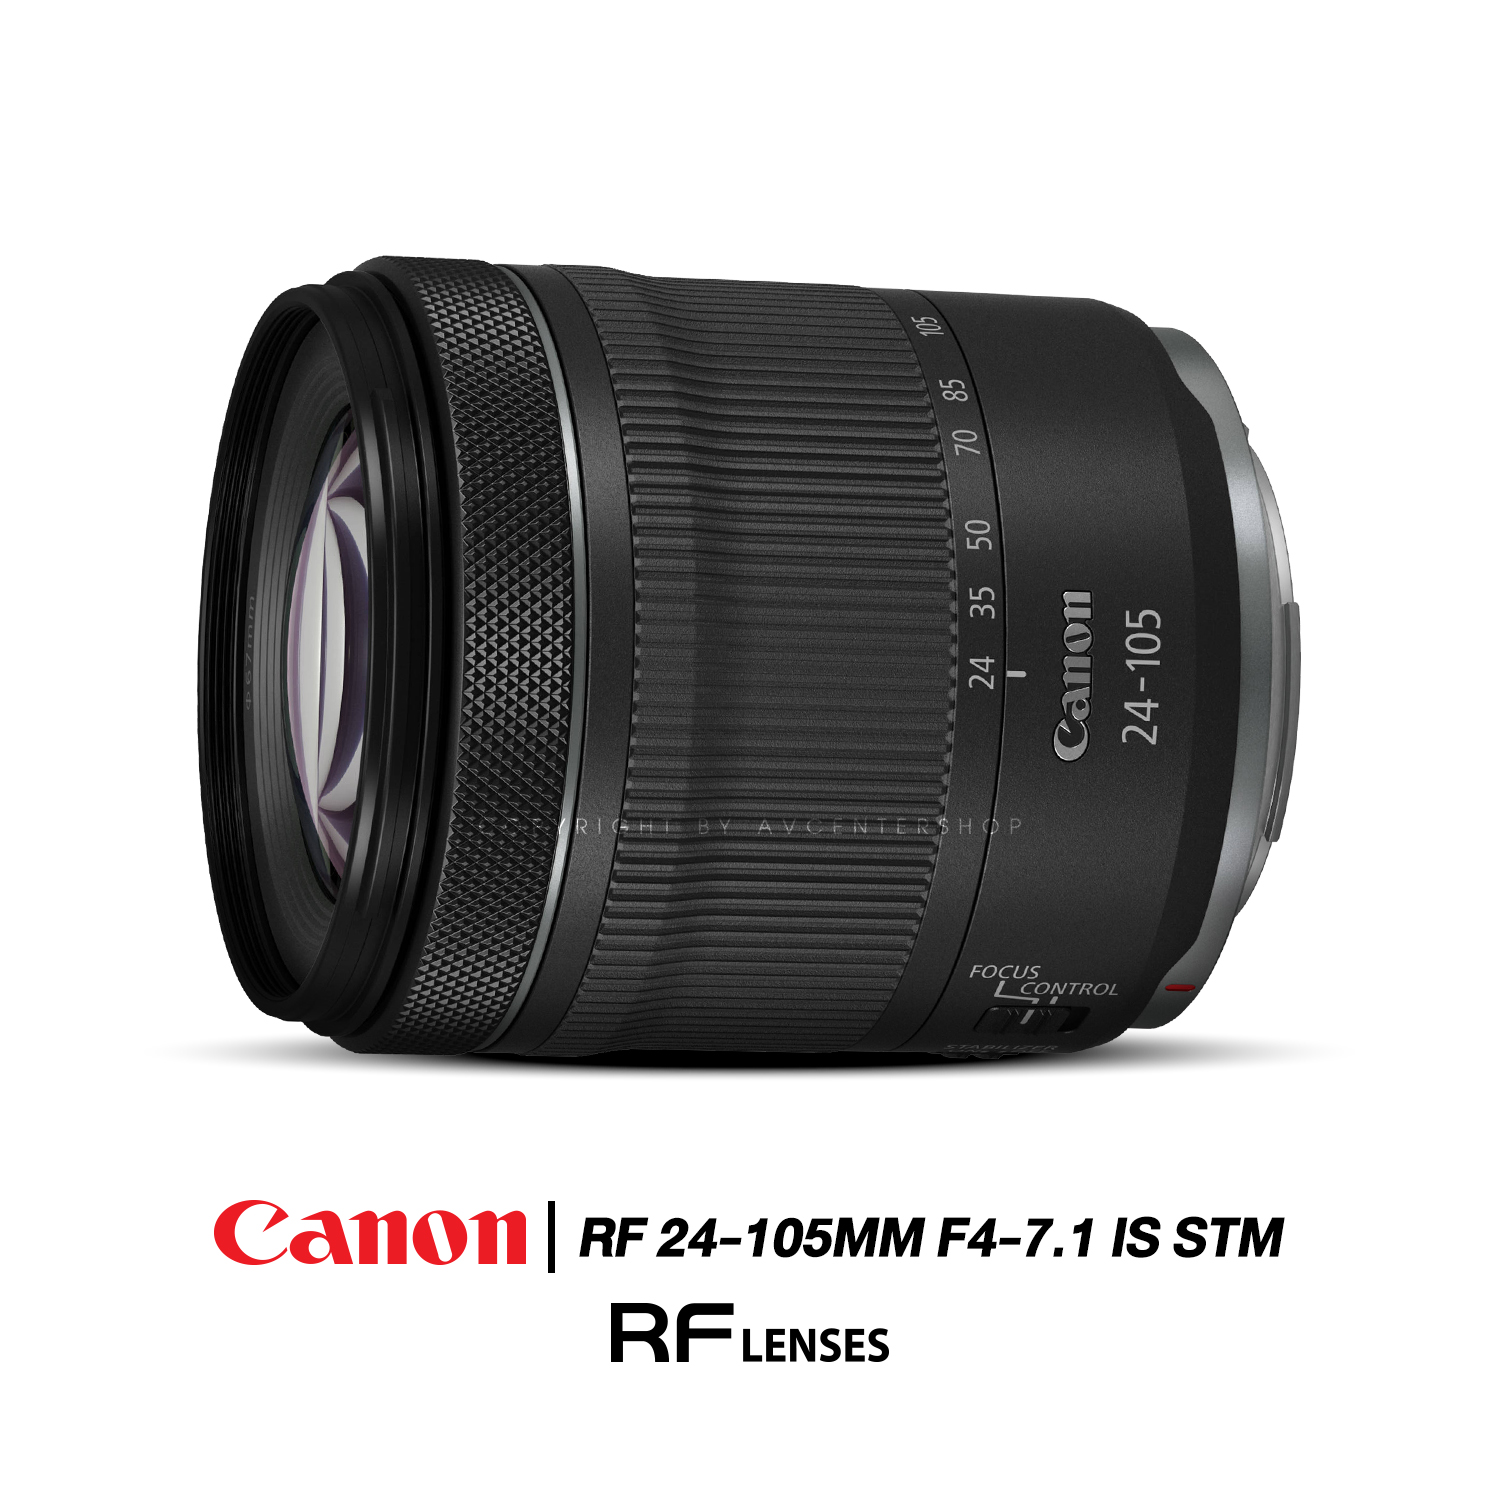 Canon Lens RF 24-105 mm. F4-7.1 IS STM